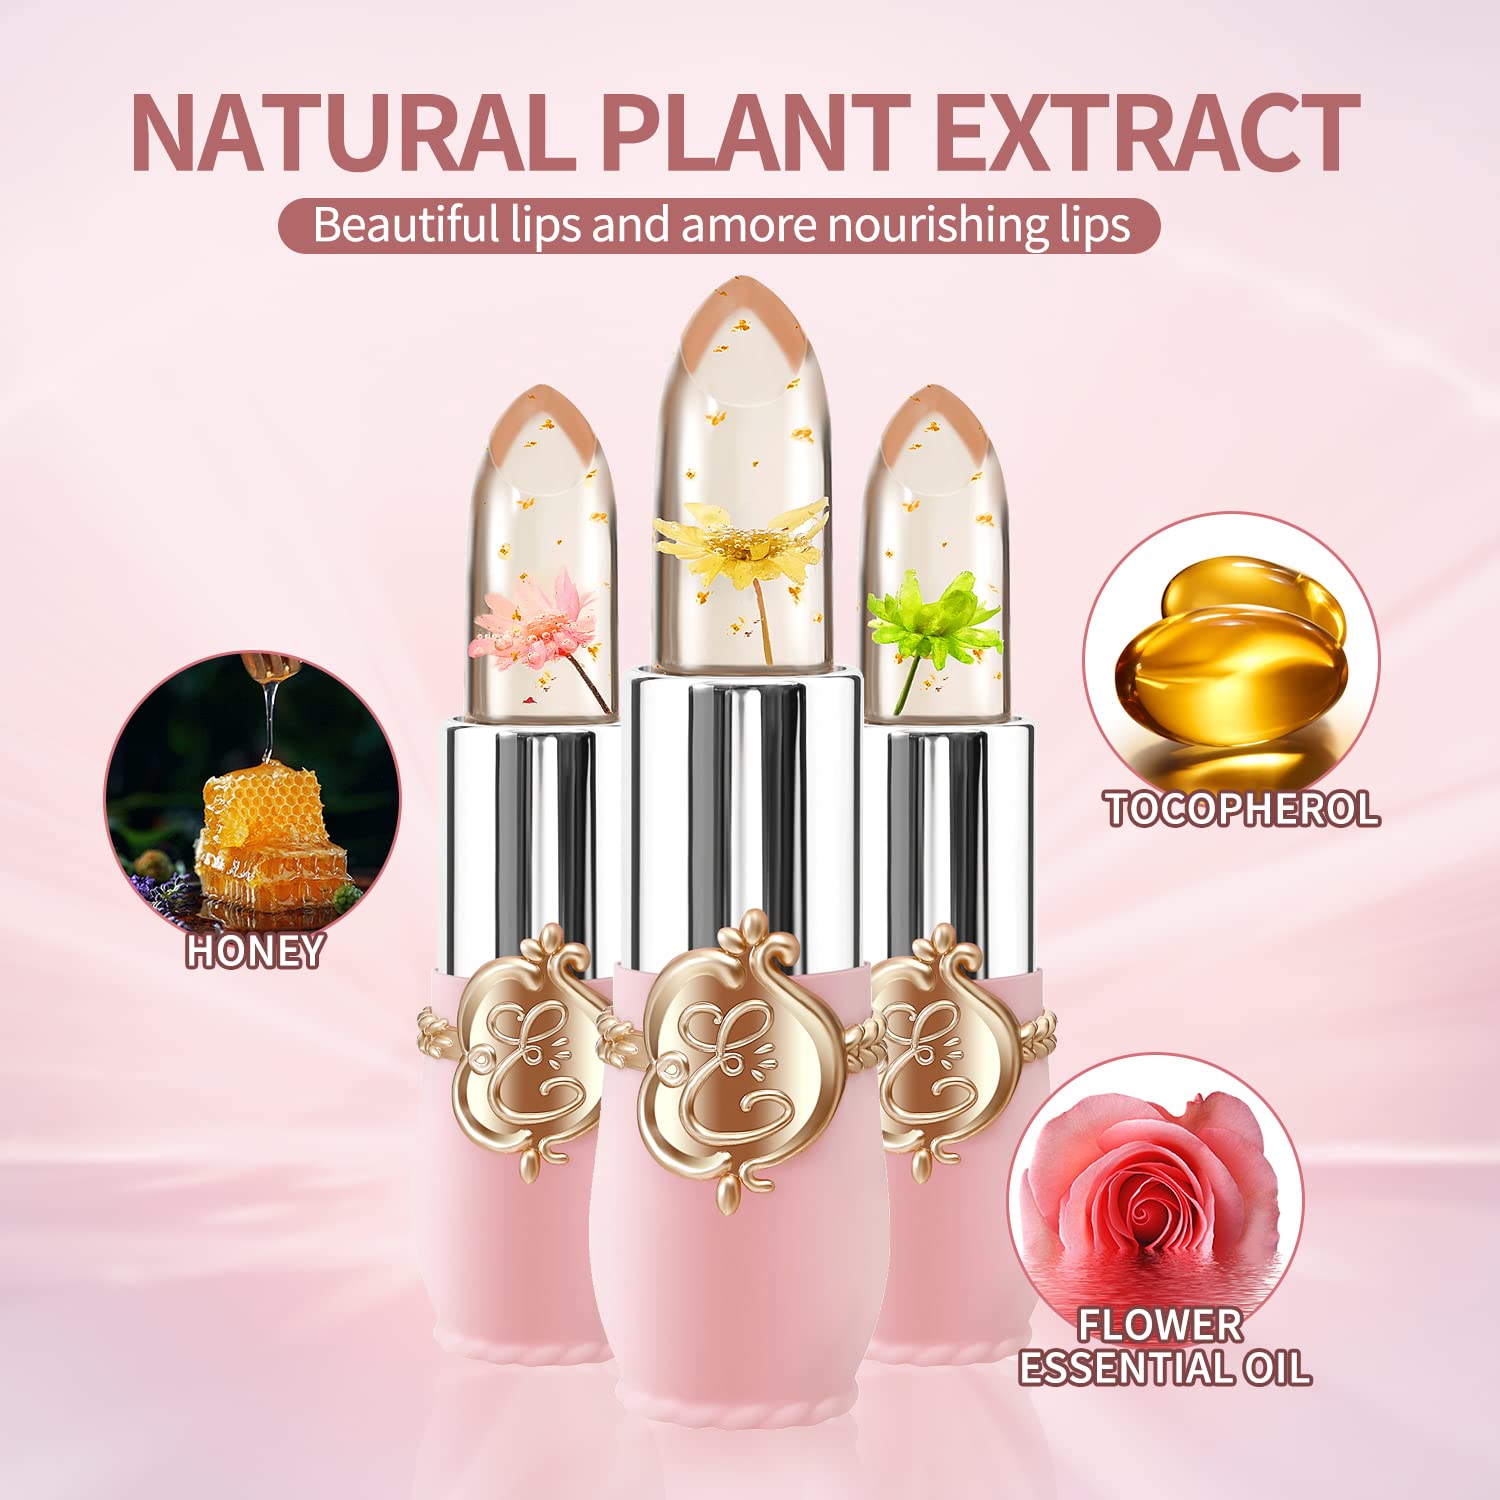 3 Pcs/Set Flower Jelly Lipstick Set Temperature Change Moisturizer Long Lasting Nutritious Balm Magic Color Change Lip Gloss (3Pcs Flower Jelly Lipstick B)